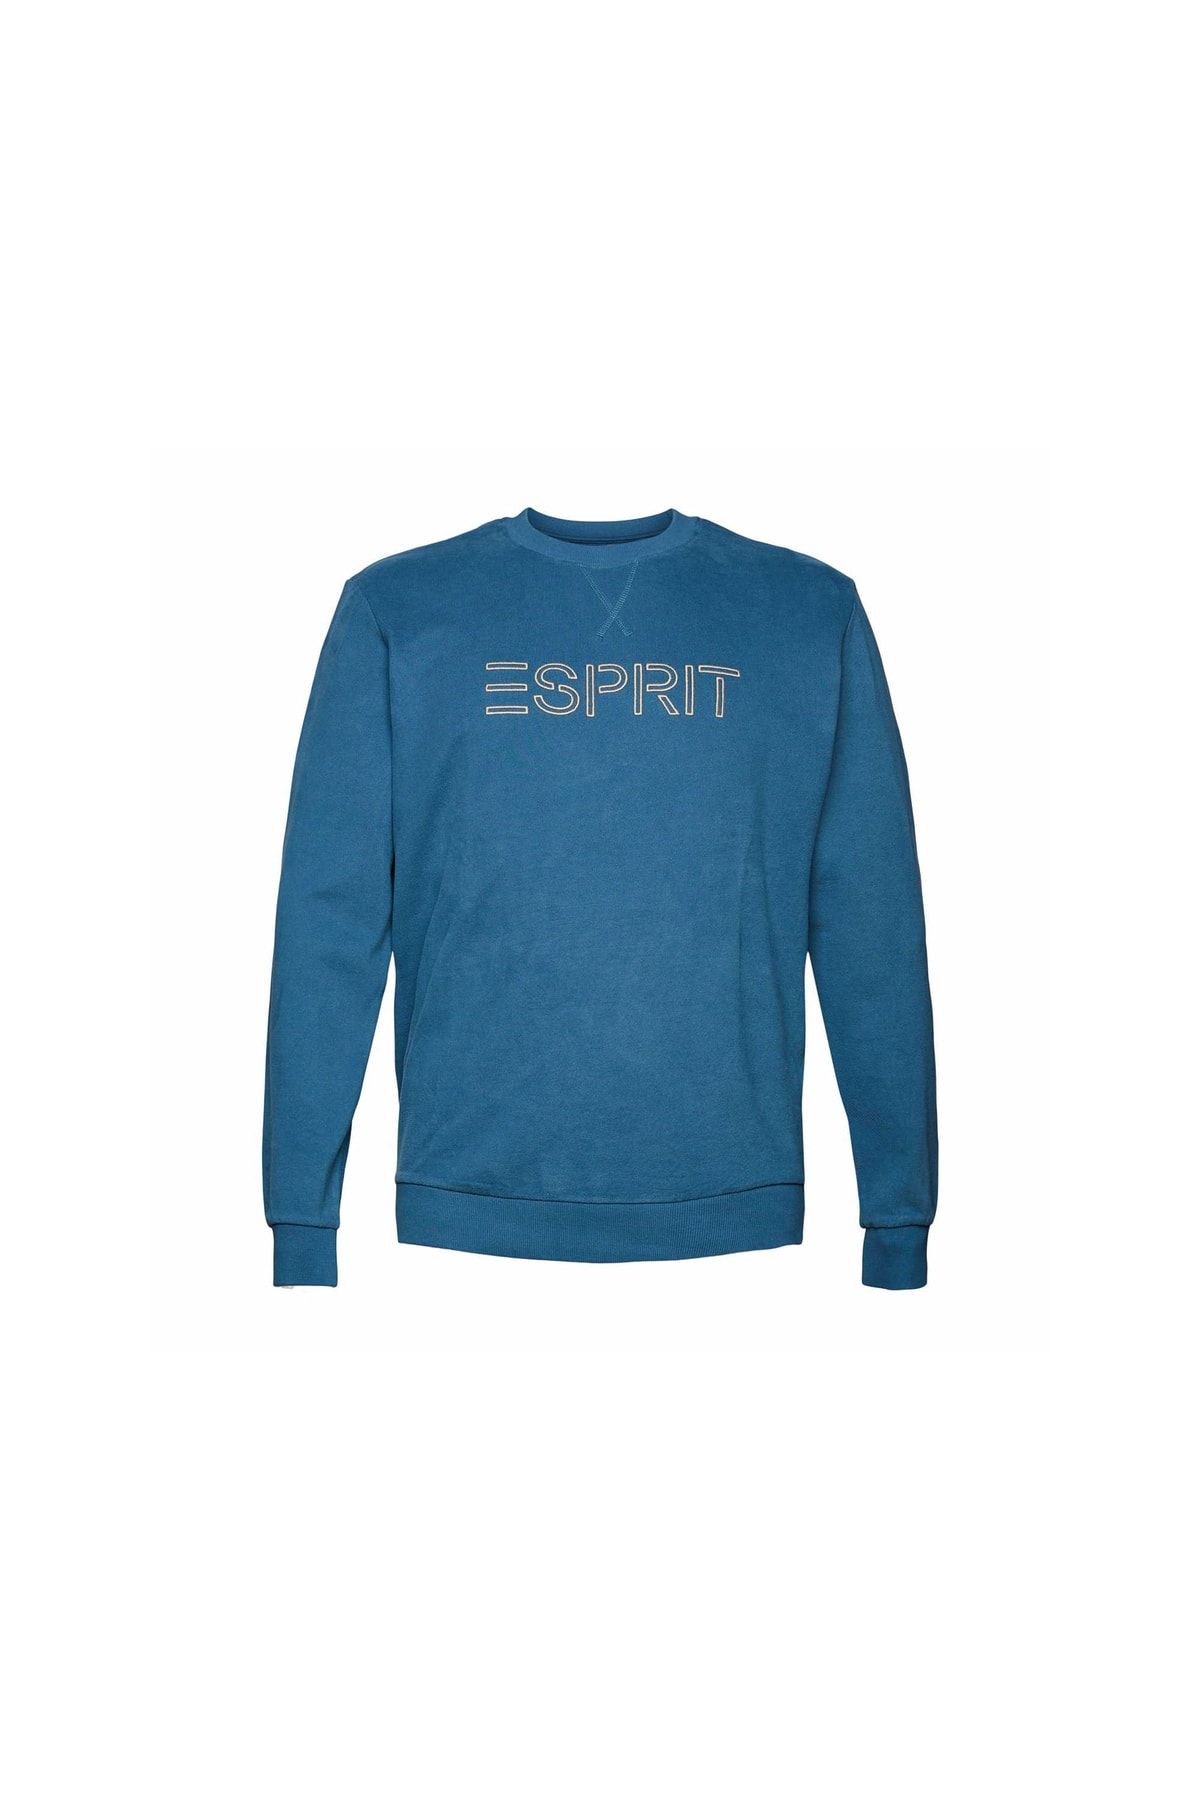 Esprit Pullover - Blau - Regular Fit - Trendyol